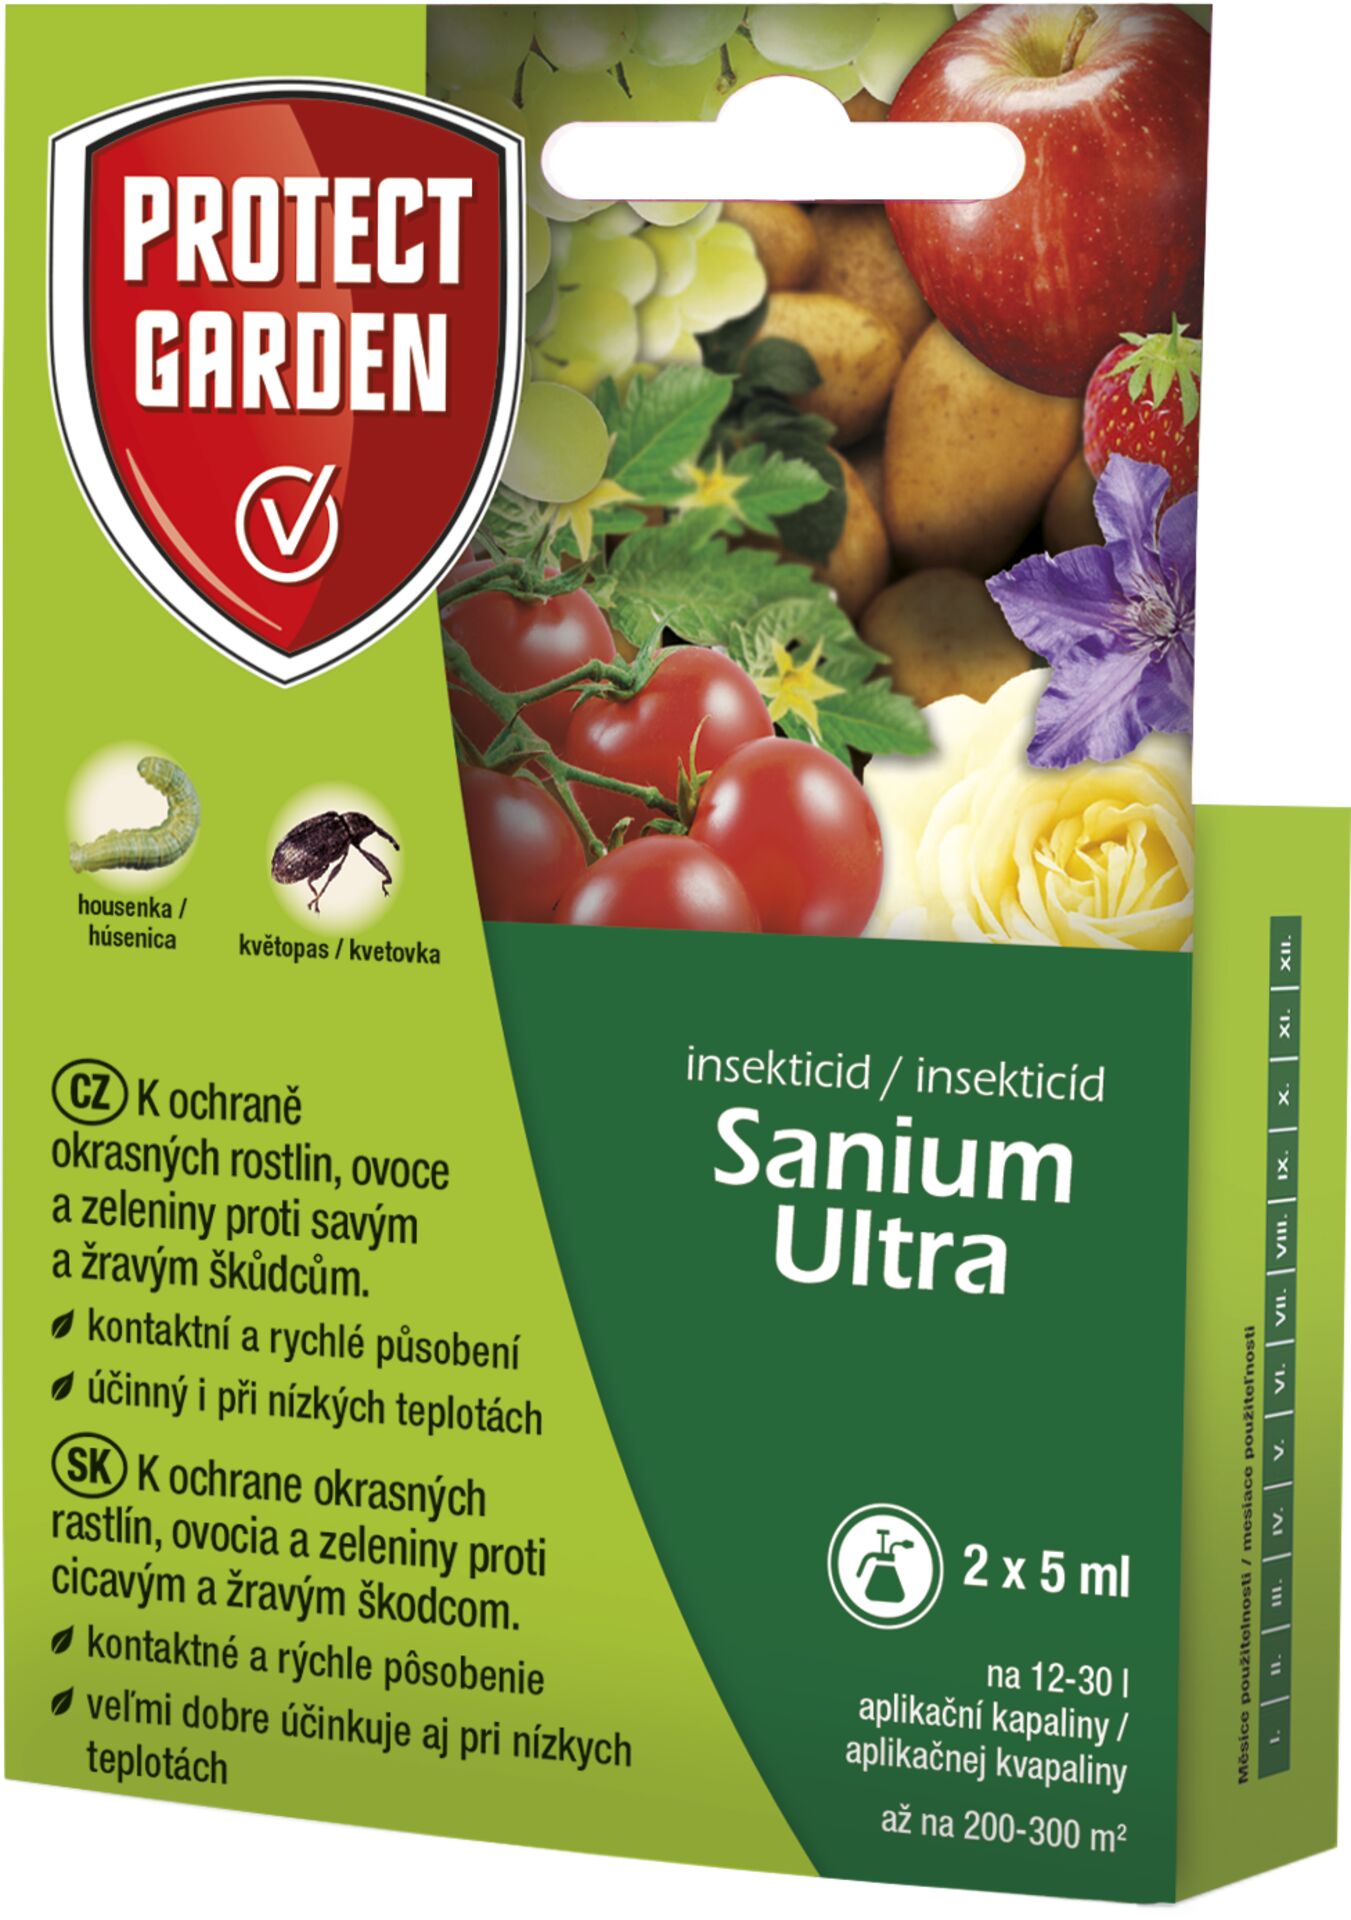 Sanium Ultra - okrasné rostliny, ovoce a zelenina 2x5 ml PG SBM